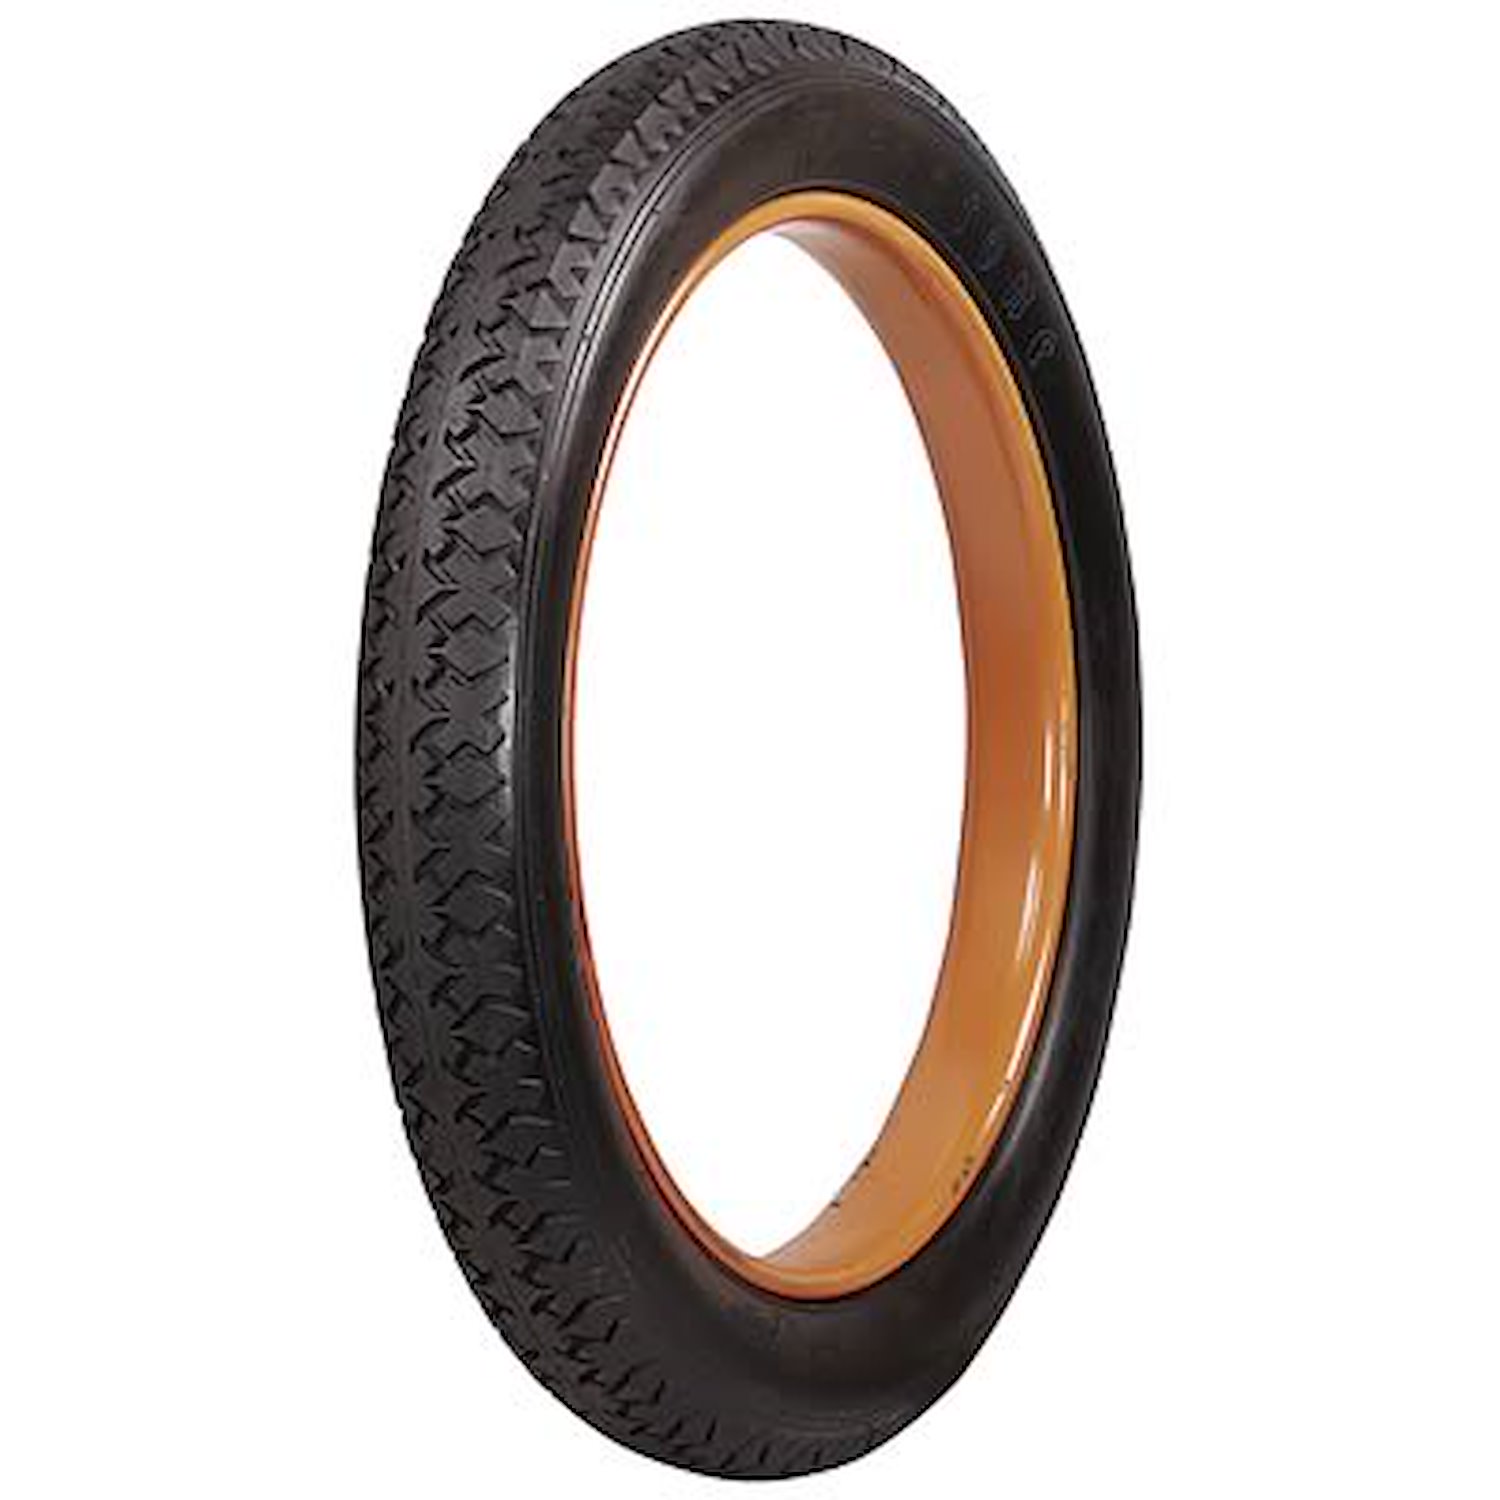 793850 Tire, Firestone Cl-Incher, All Black, 30x35